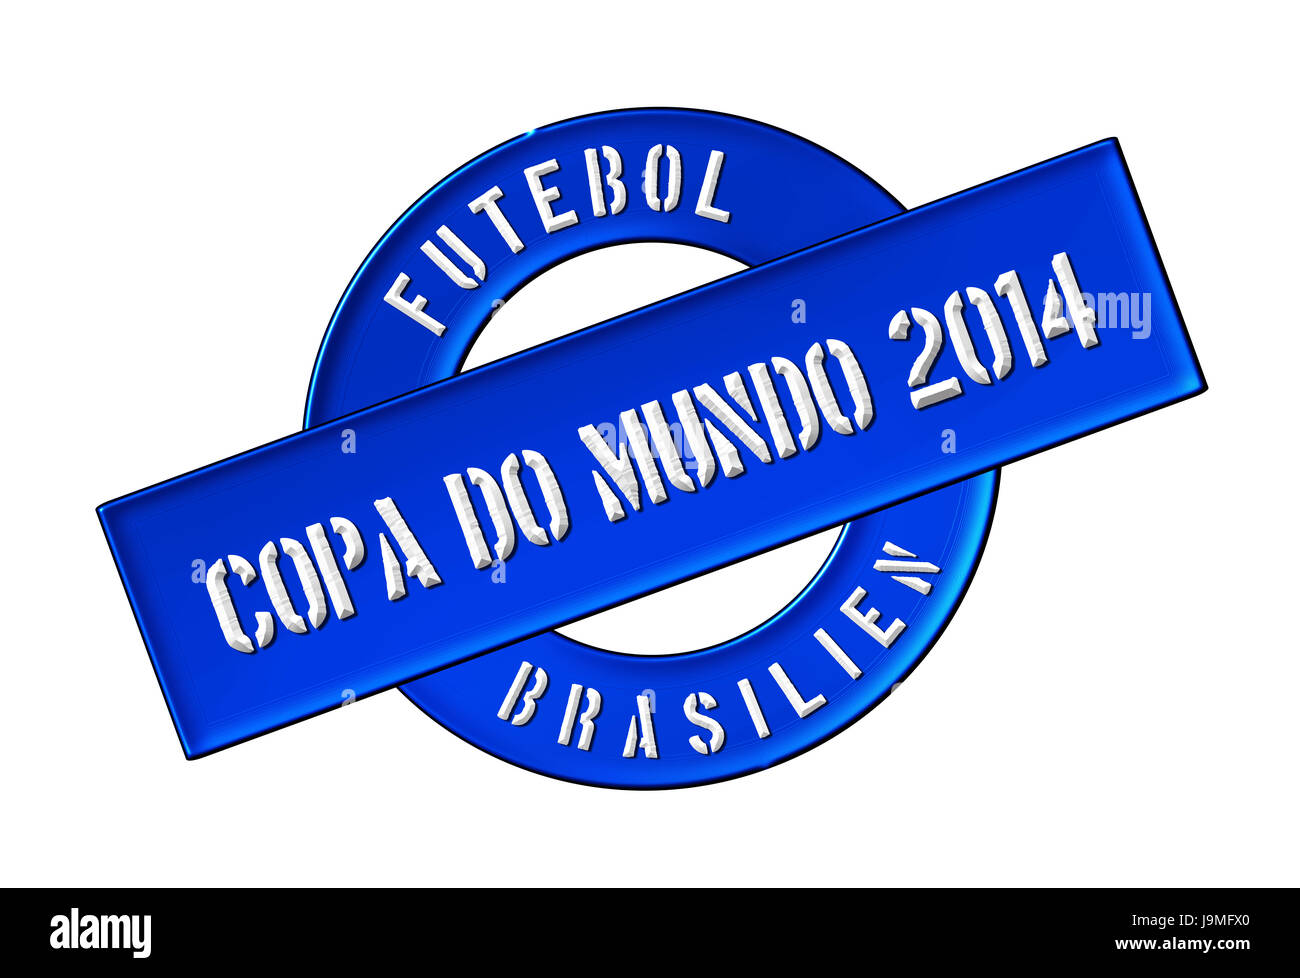 brazil, wm, seal, banners, brazil, wm, seal, football, banners, fussball, 2014, Stock Photo